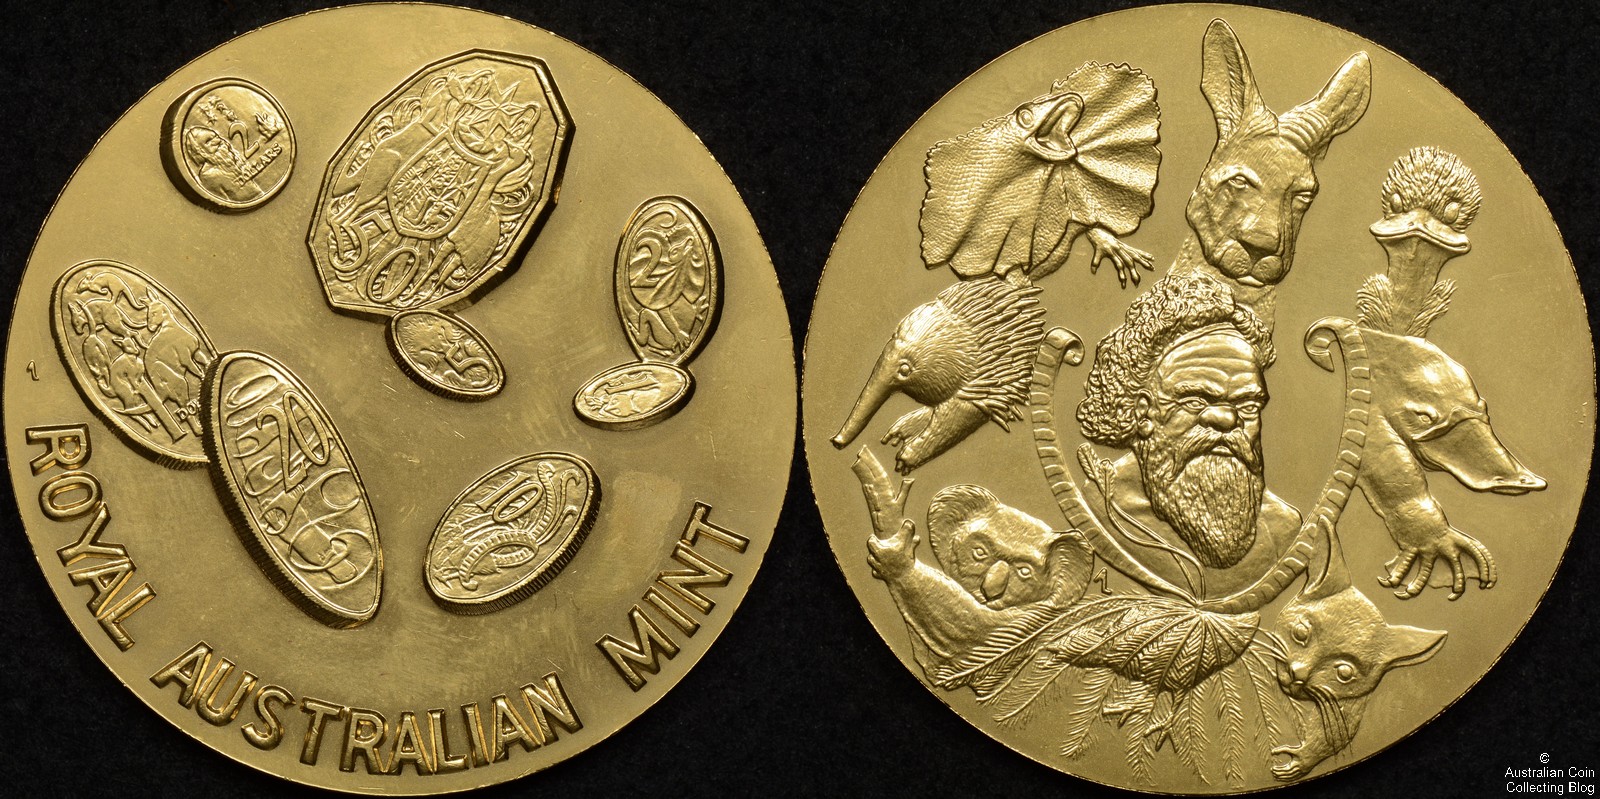 Australia circa 1990 Royal Australian Mint Medal